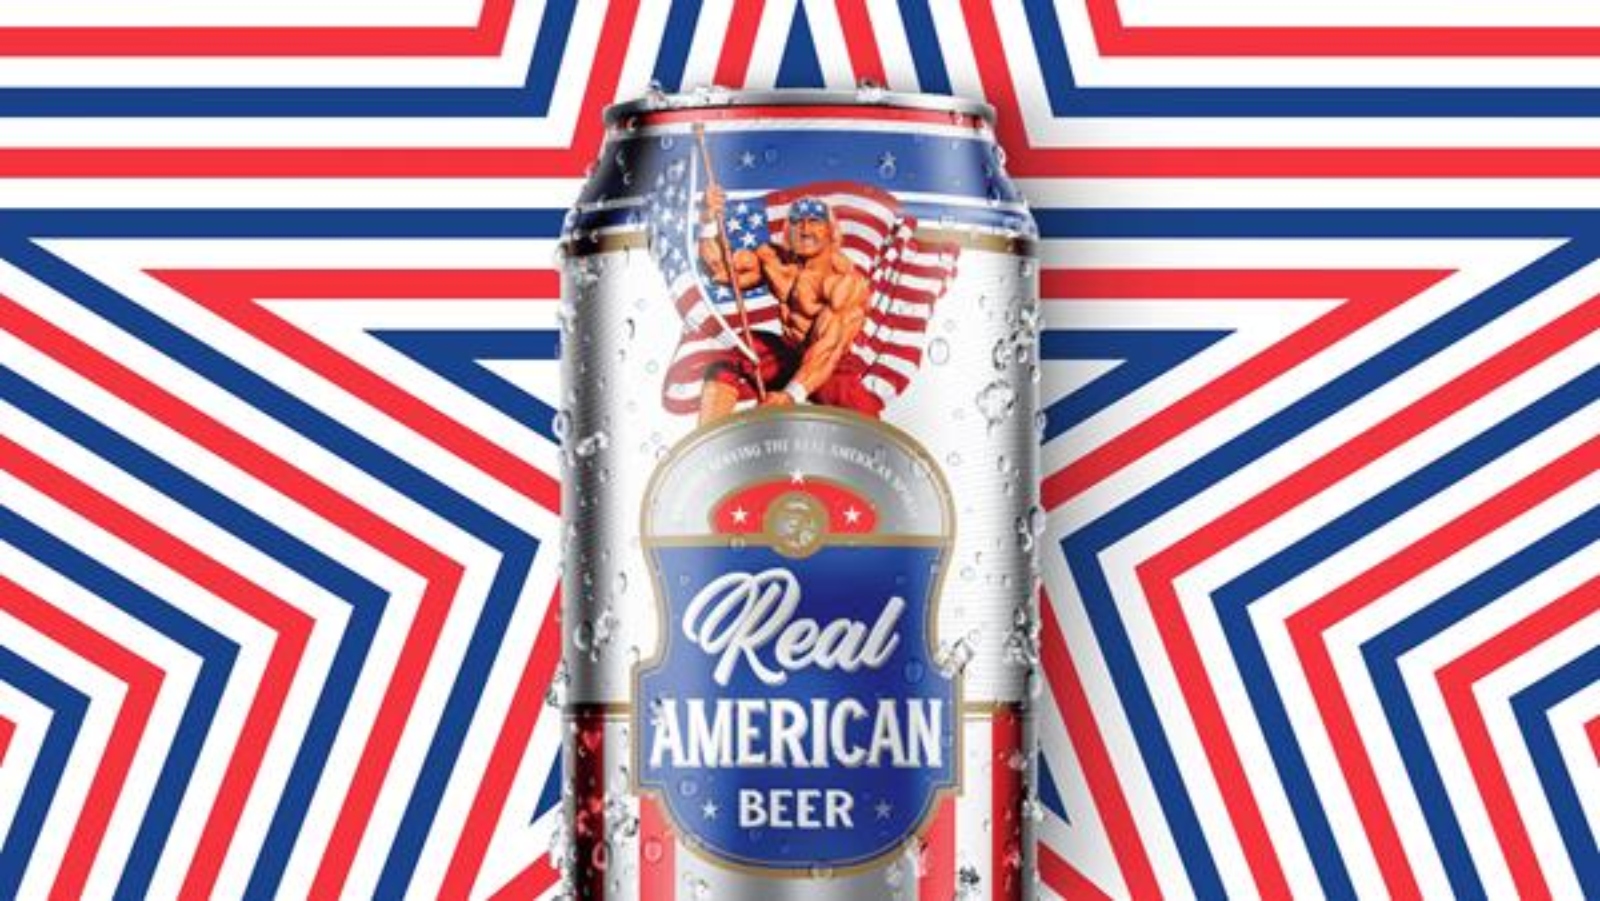 Real American Beer can featuring Hulk Hogan